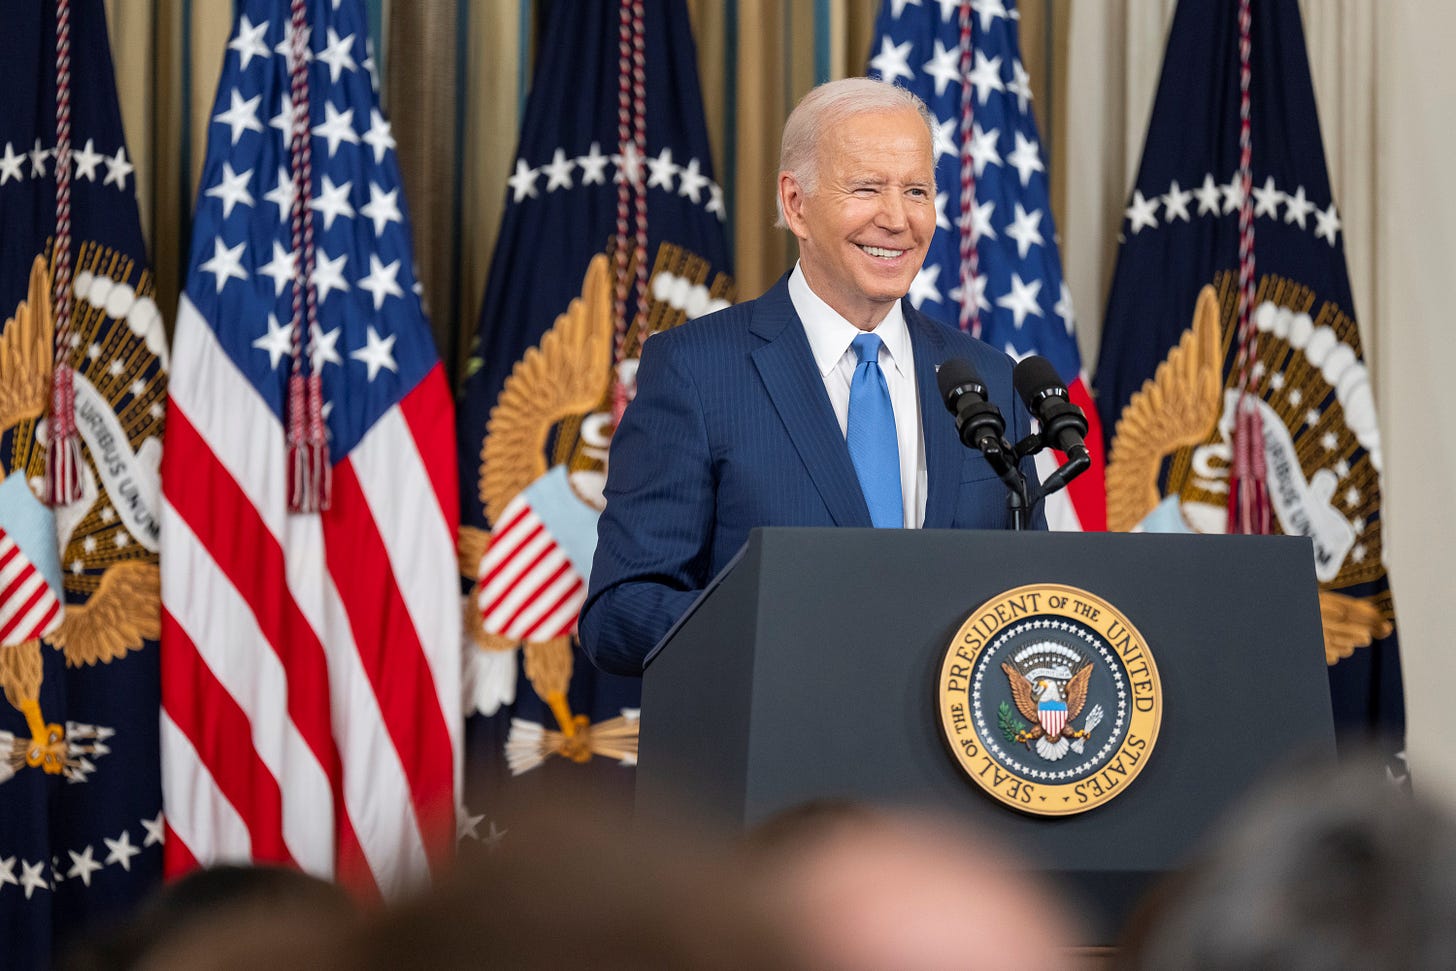 President Biden delivers remarks at a podium.